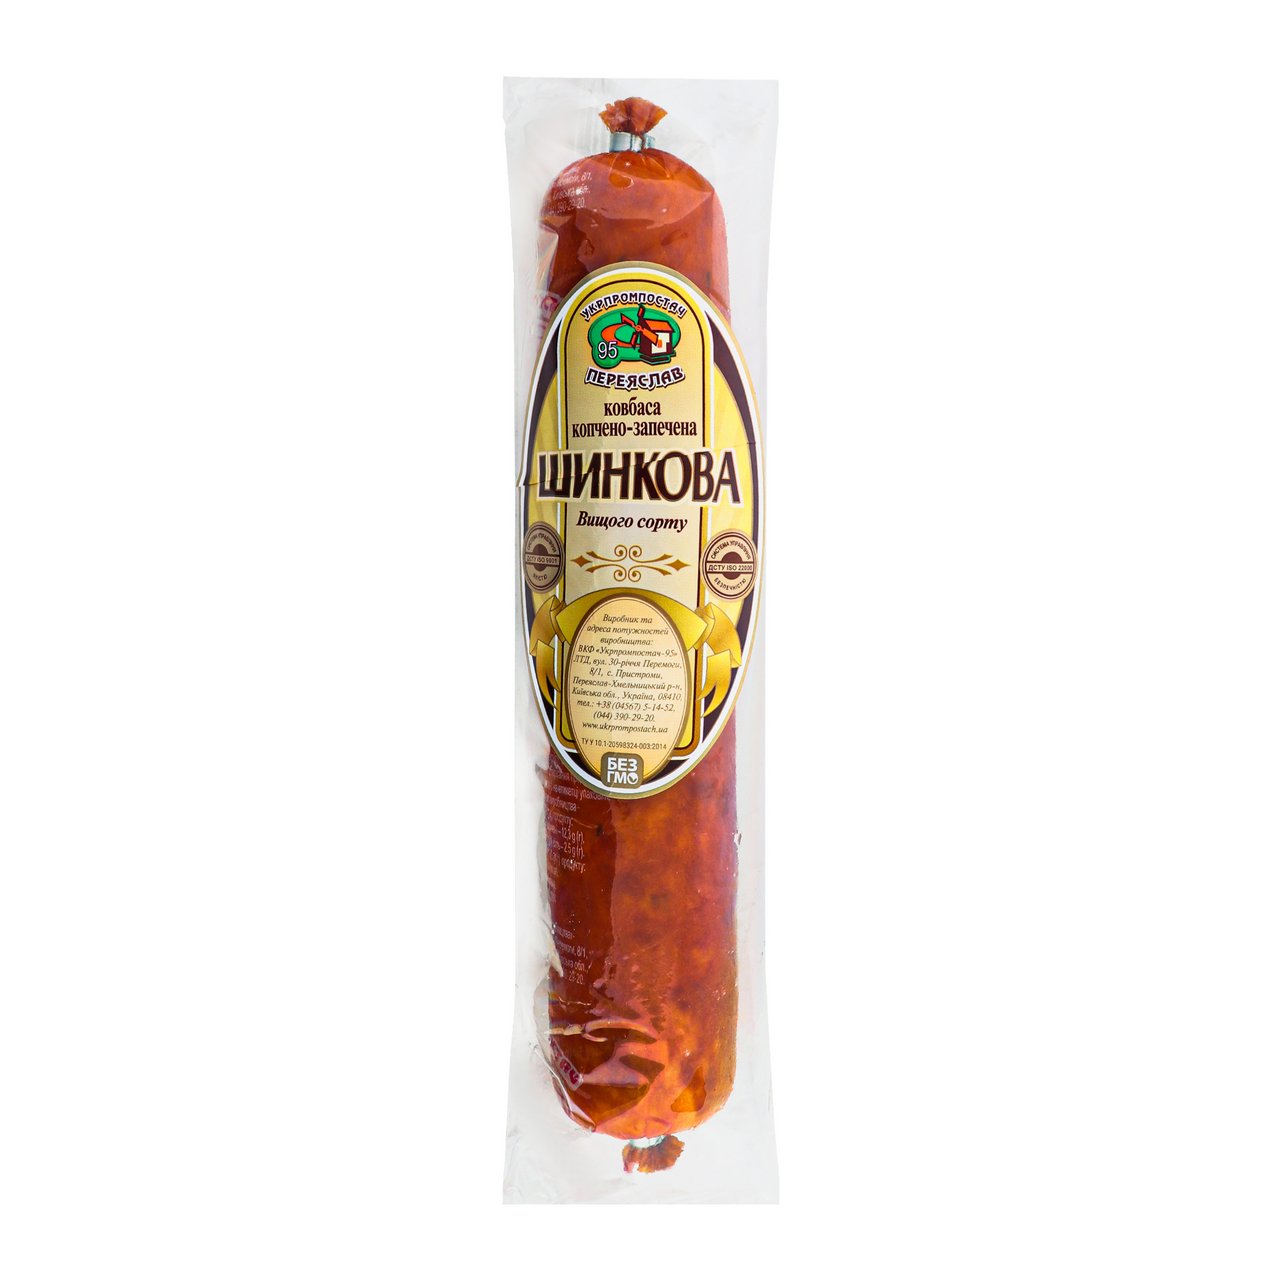 Ukrprompostach-95 Ham Smoked-Baked Sausage